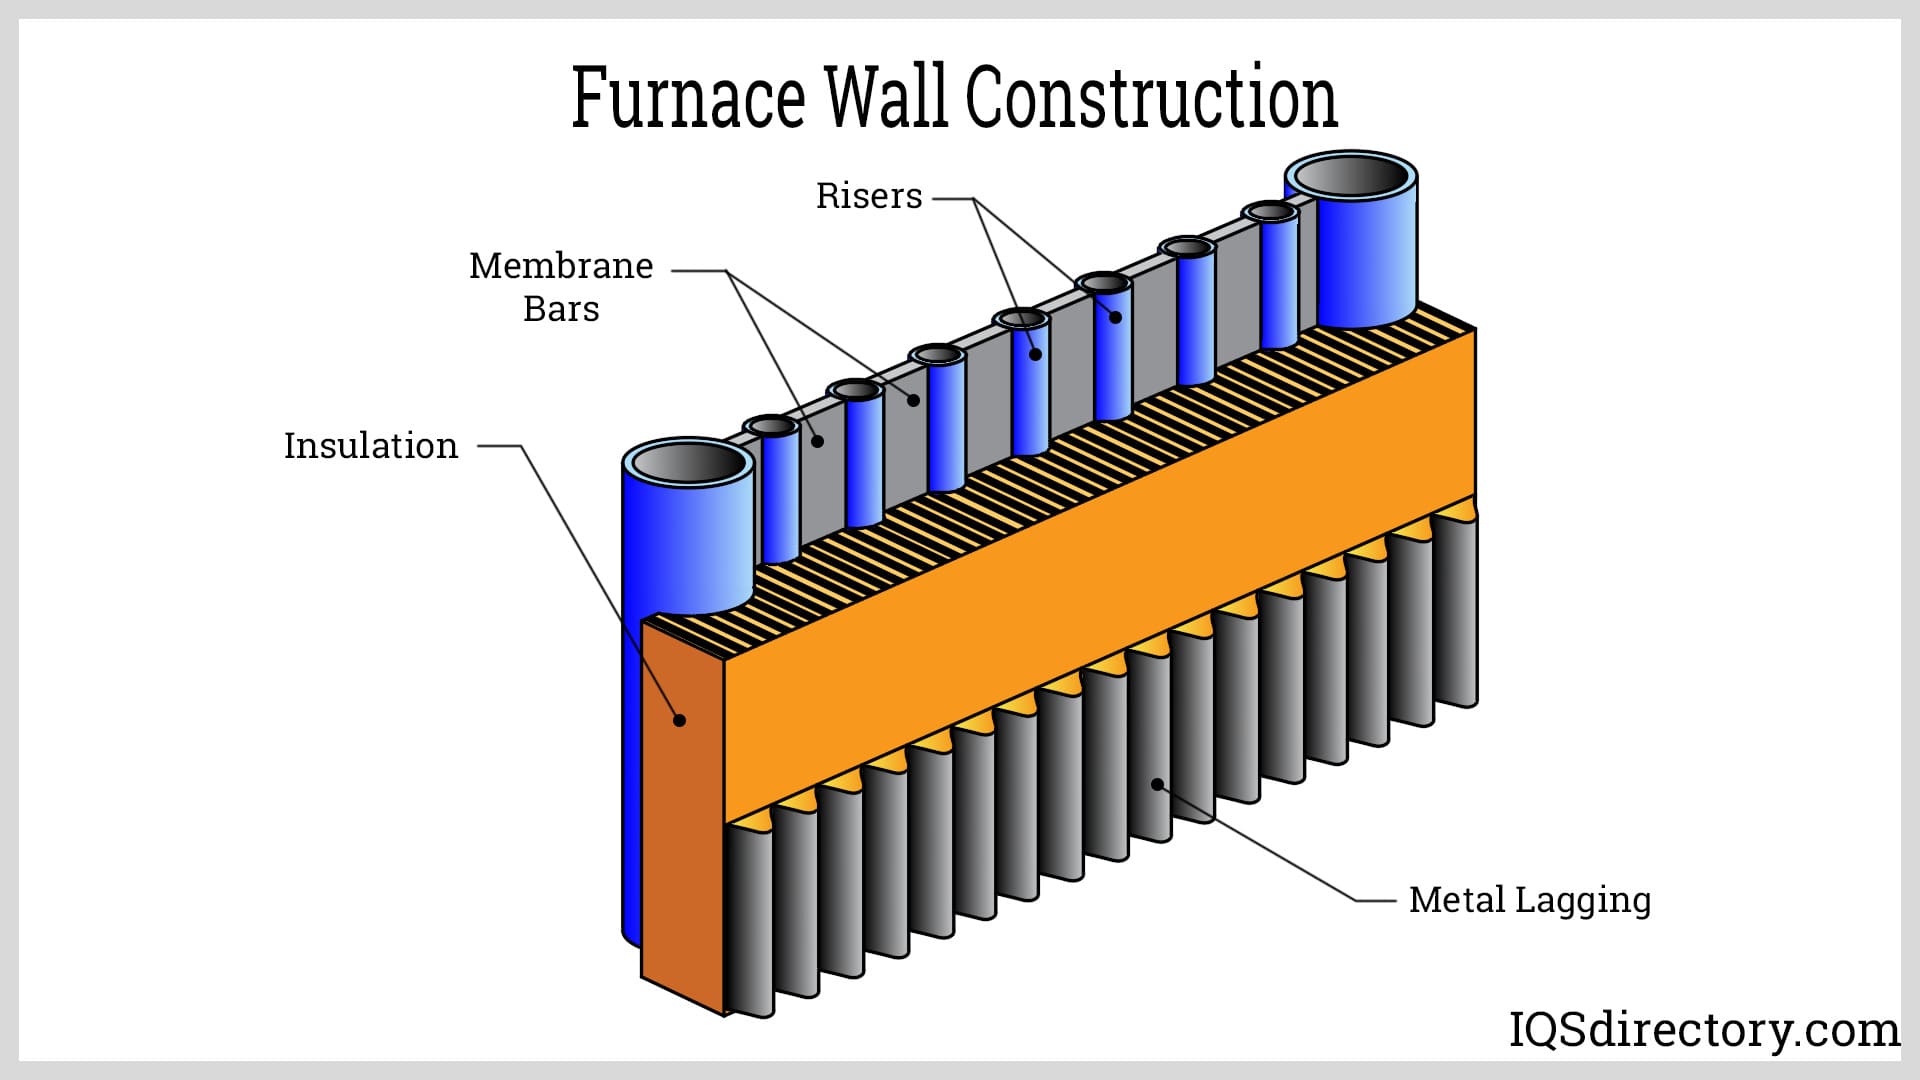 Furnace Wall Construction